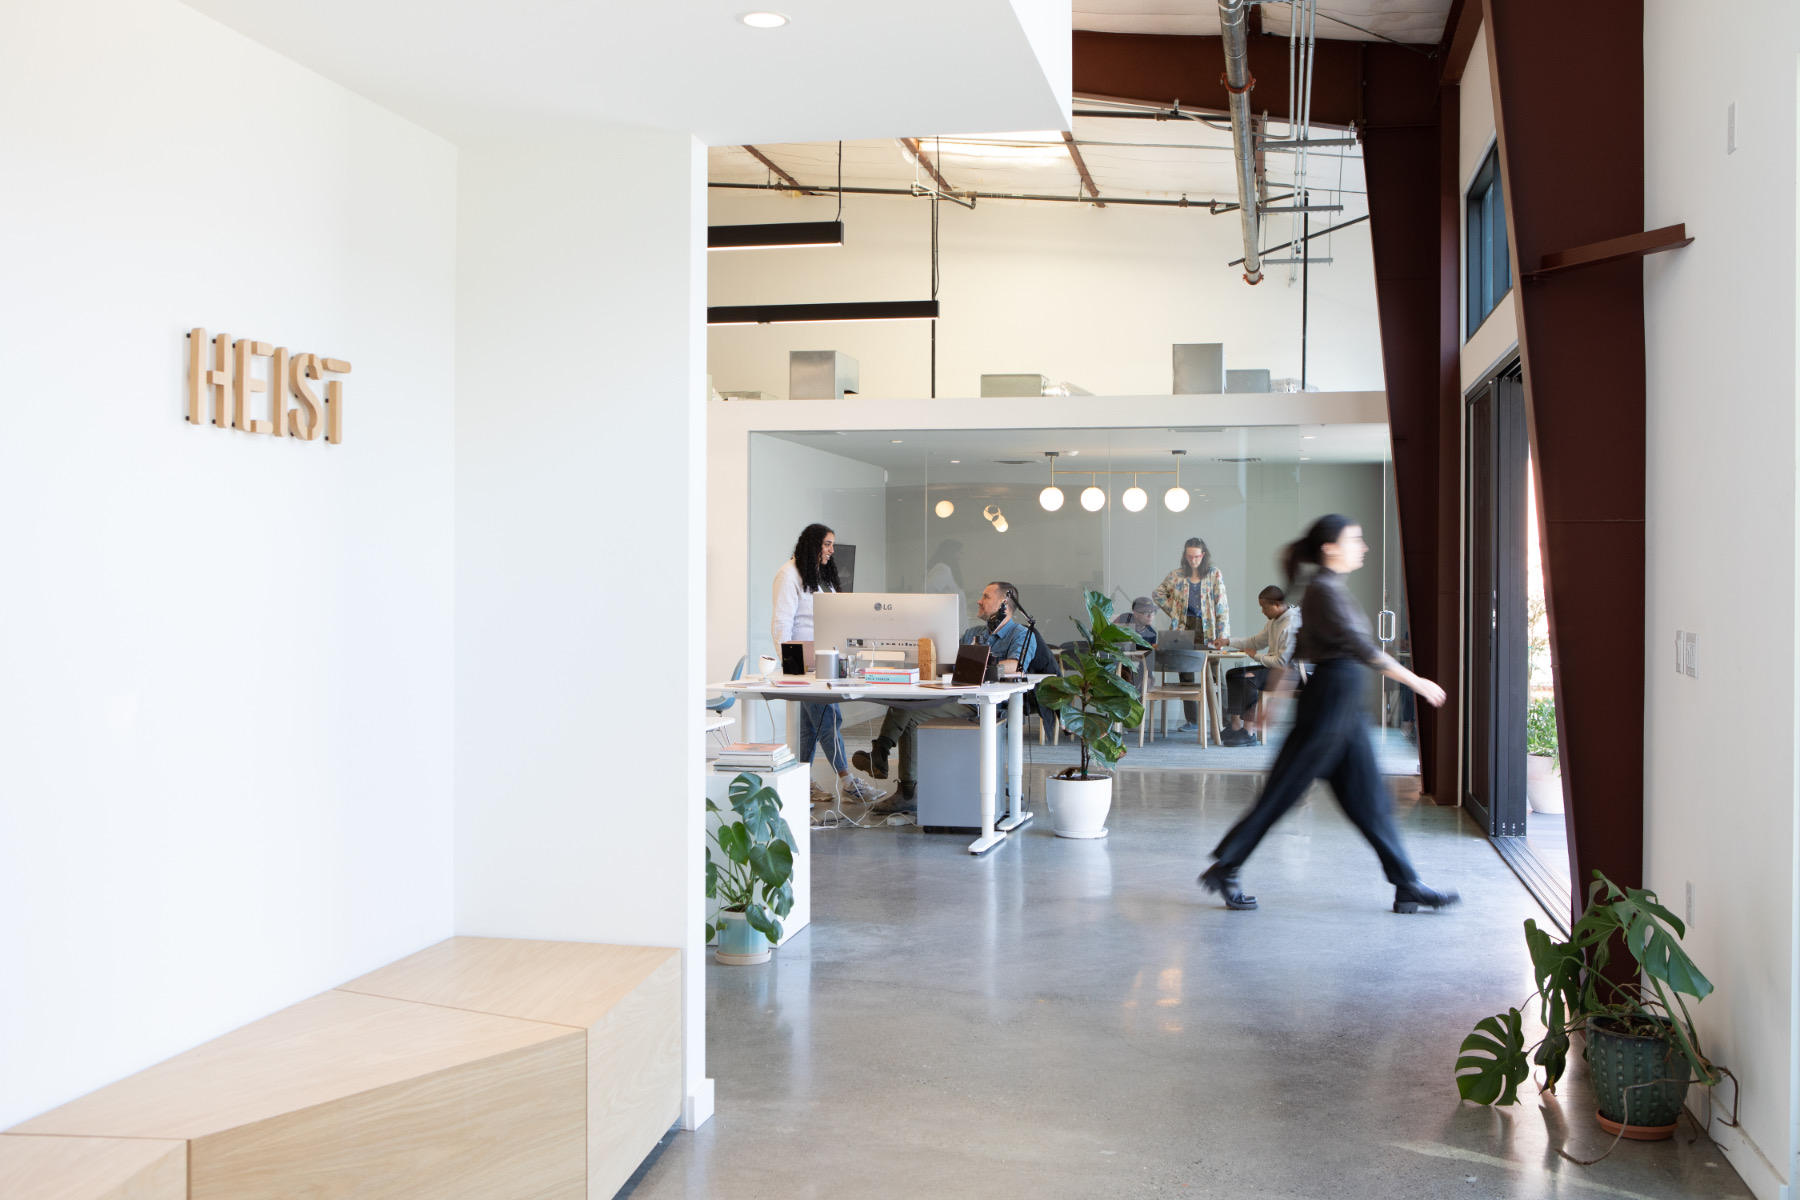 A Look Inside Heist’s New Oakland Headquarters